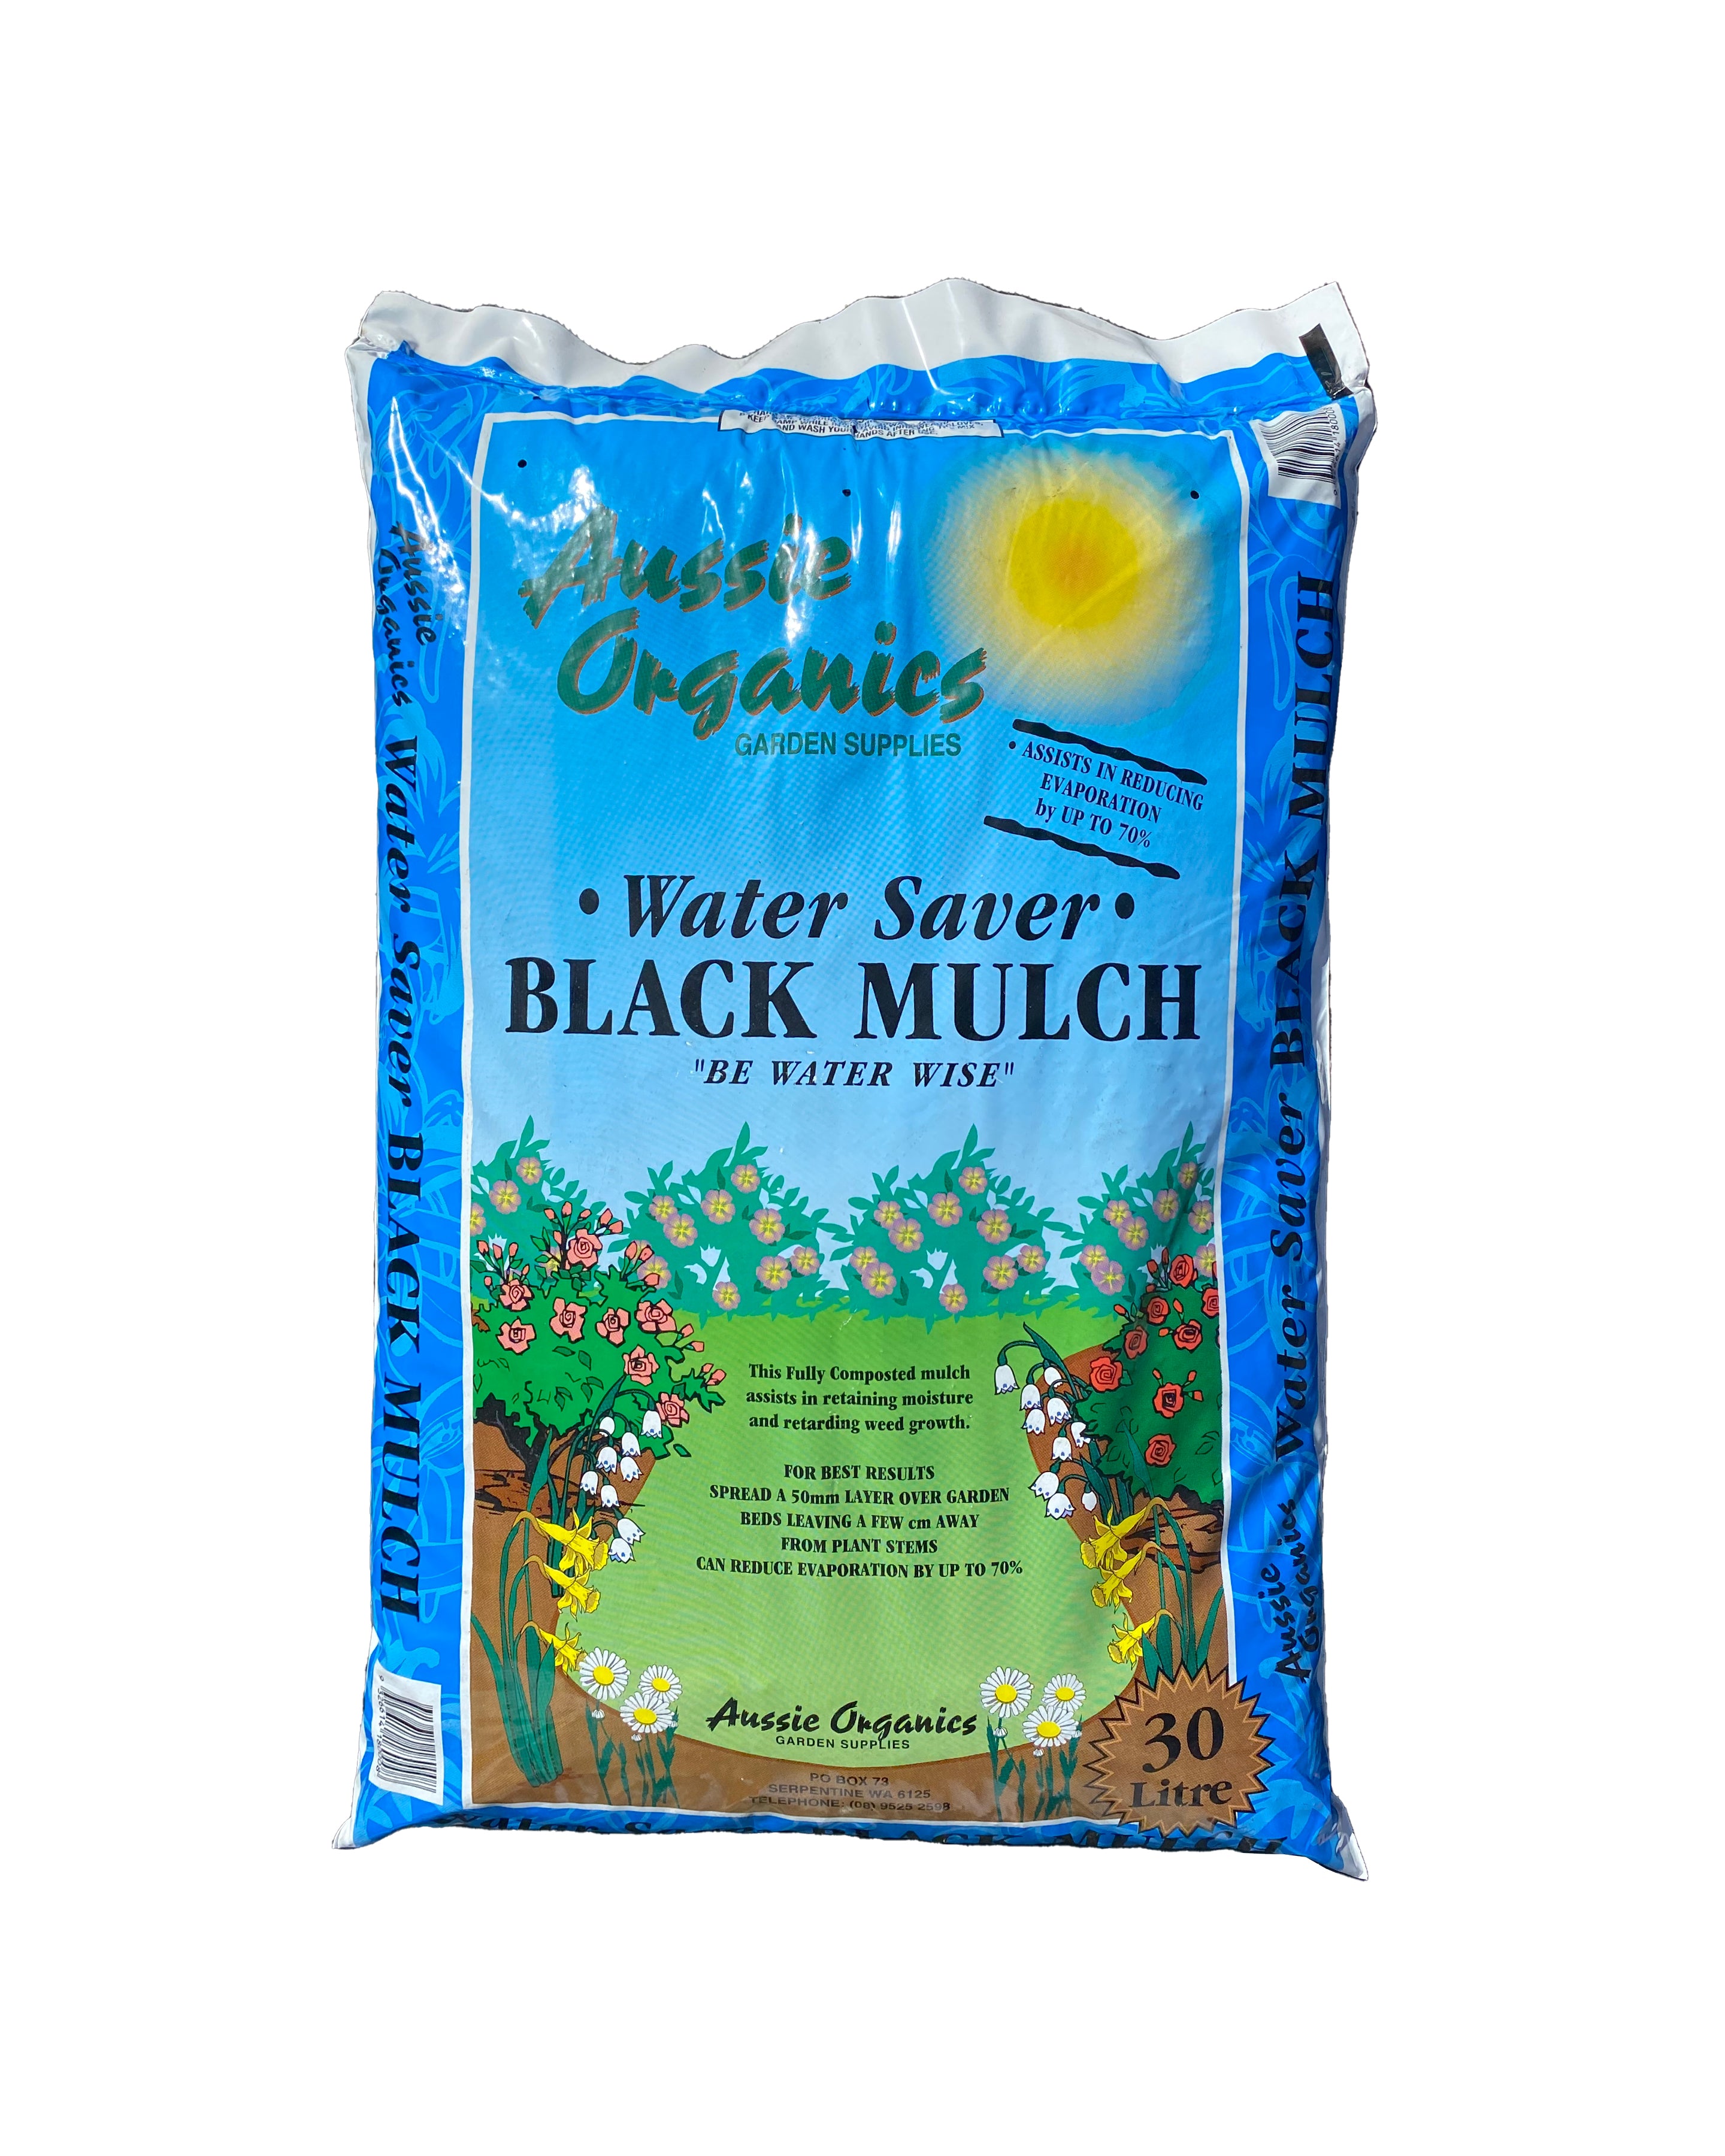 Water Saver Black Mulch